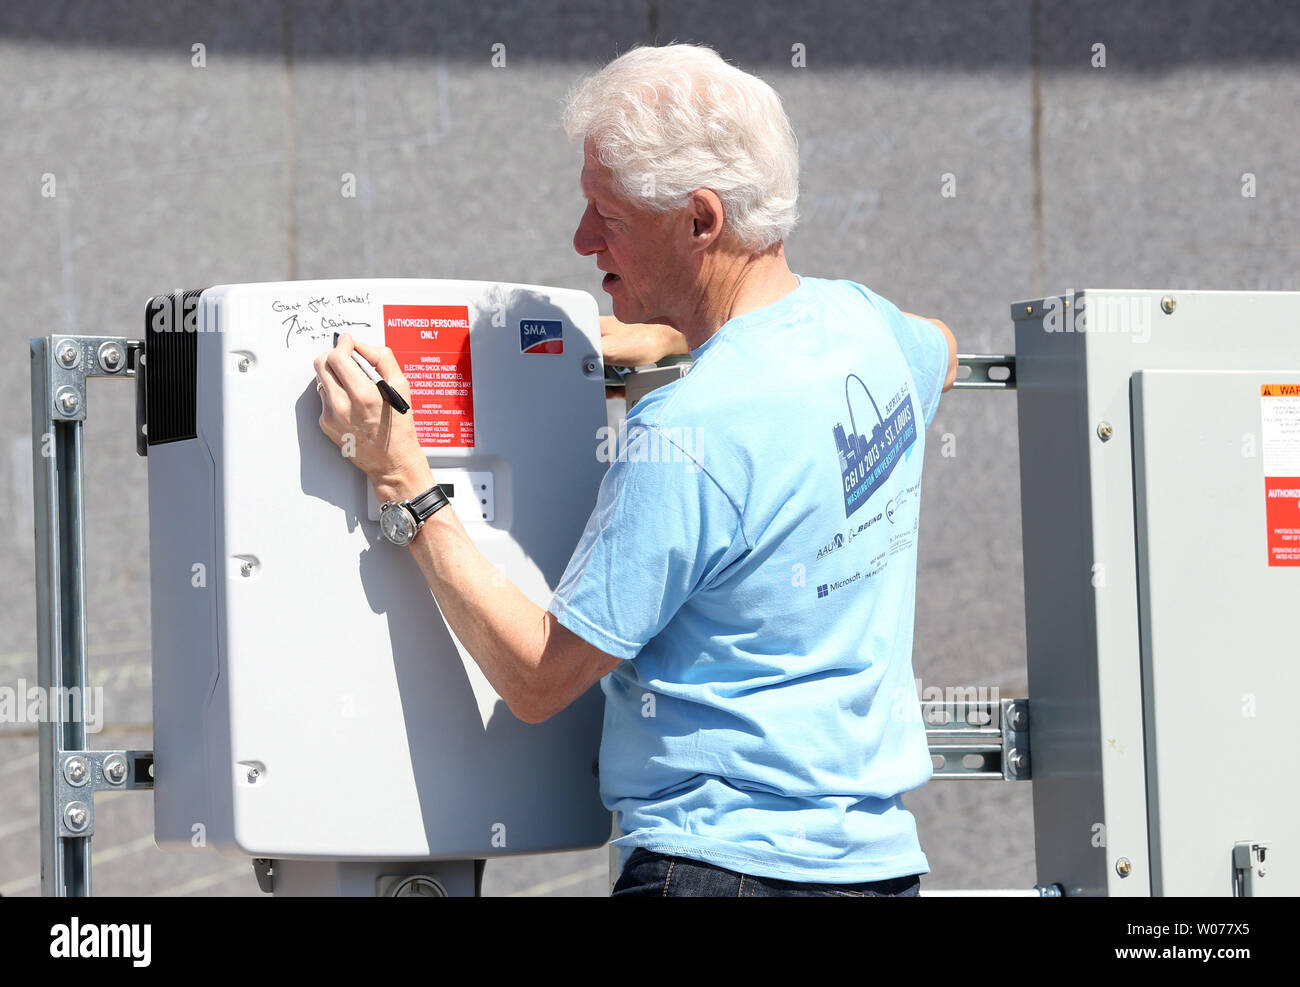 Former U.S. President Bill Clinton signs a solar panel inverter box during a Day of Service at the Gateway STEM High School in St. Louis on April 7, 2013. Clinton is in St. Louis for day 3 of the Clinton Global Initative.  UPI/Bill Greenblatt Stock Photo